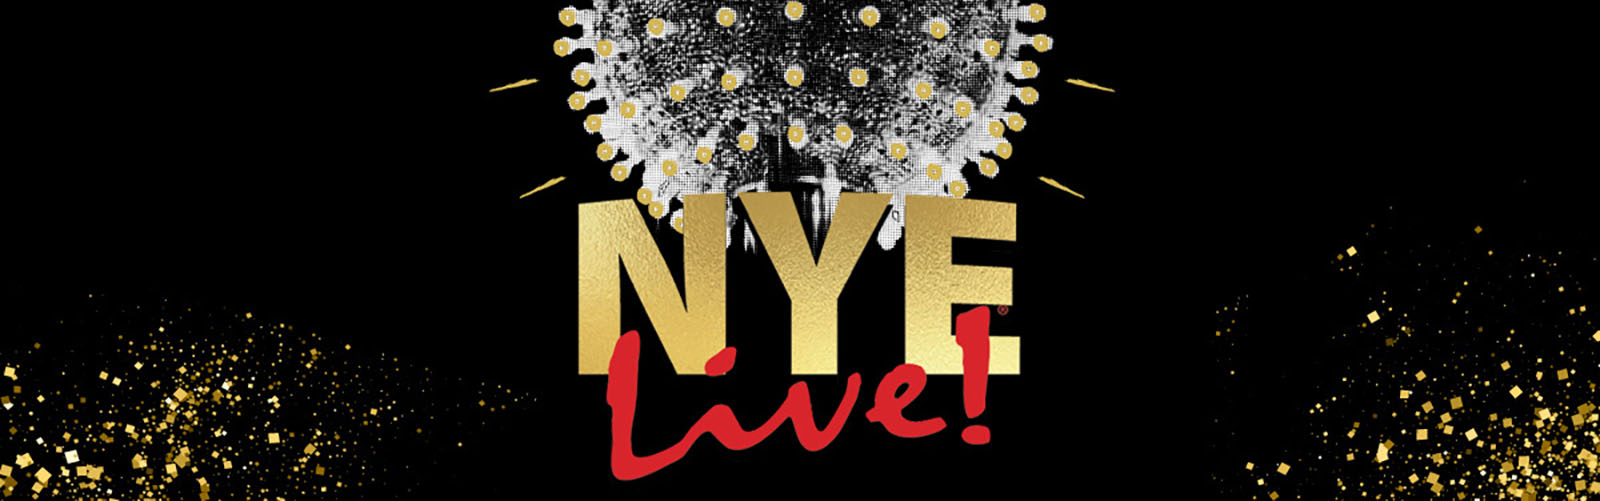 New Years Eve Live! logo